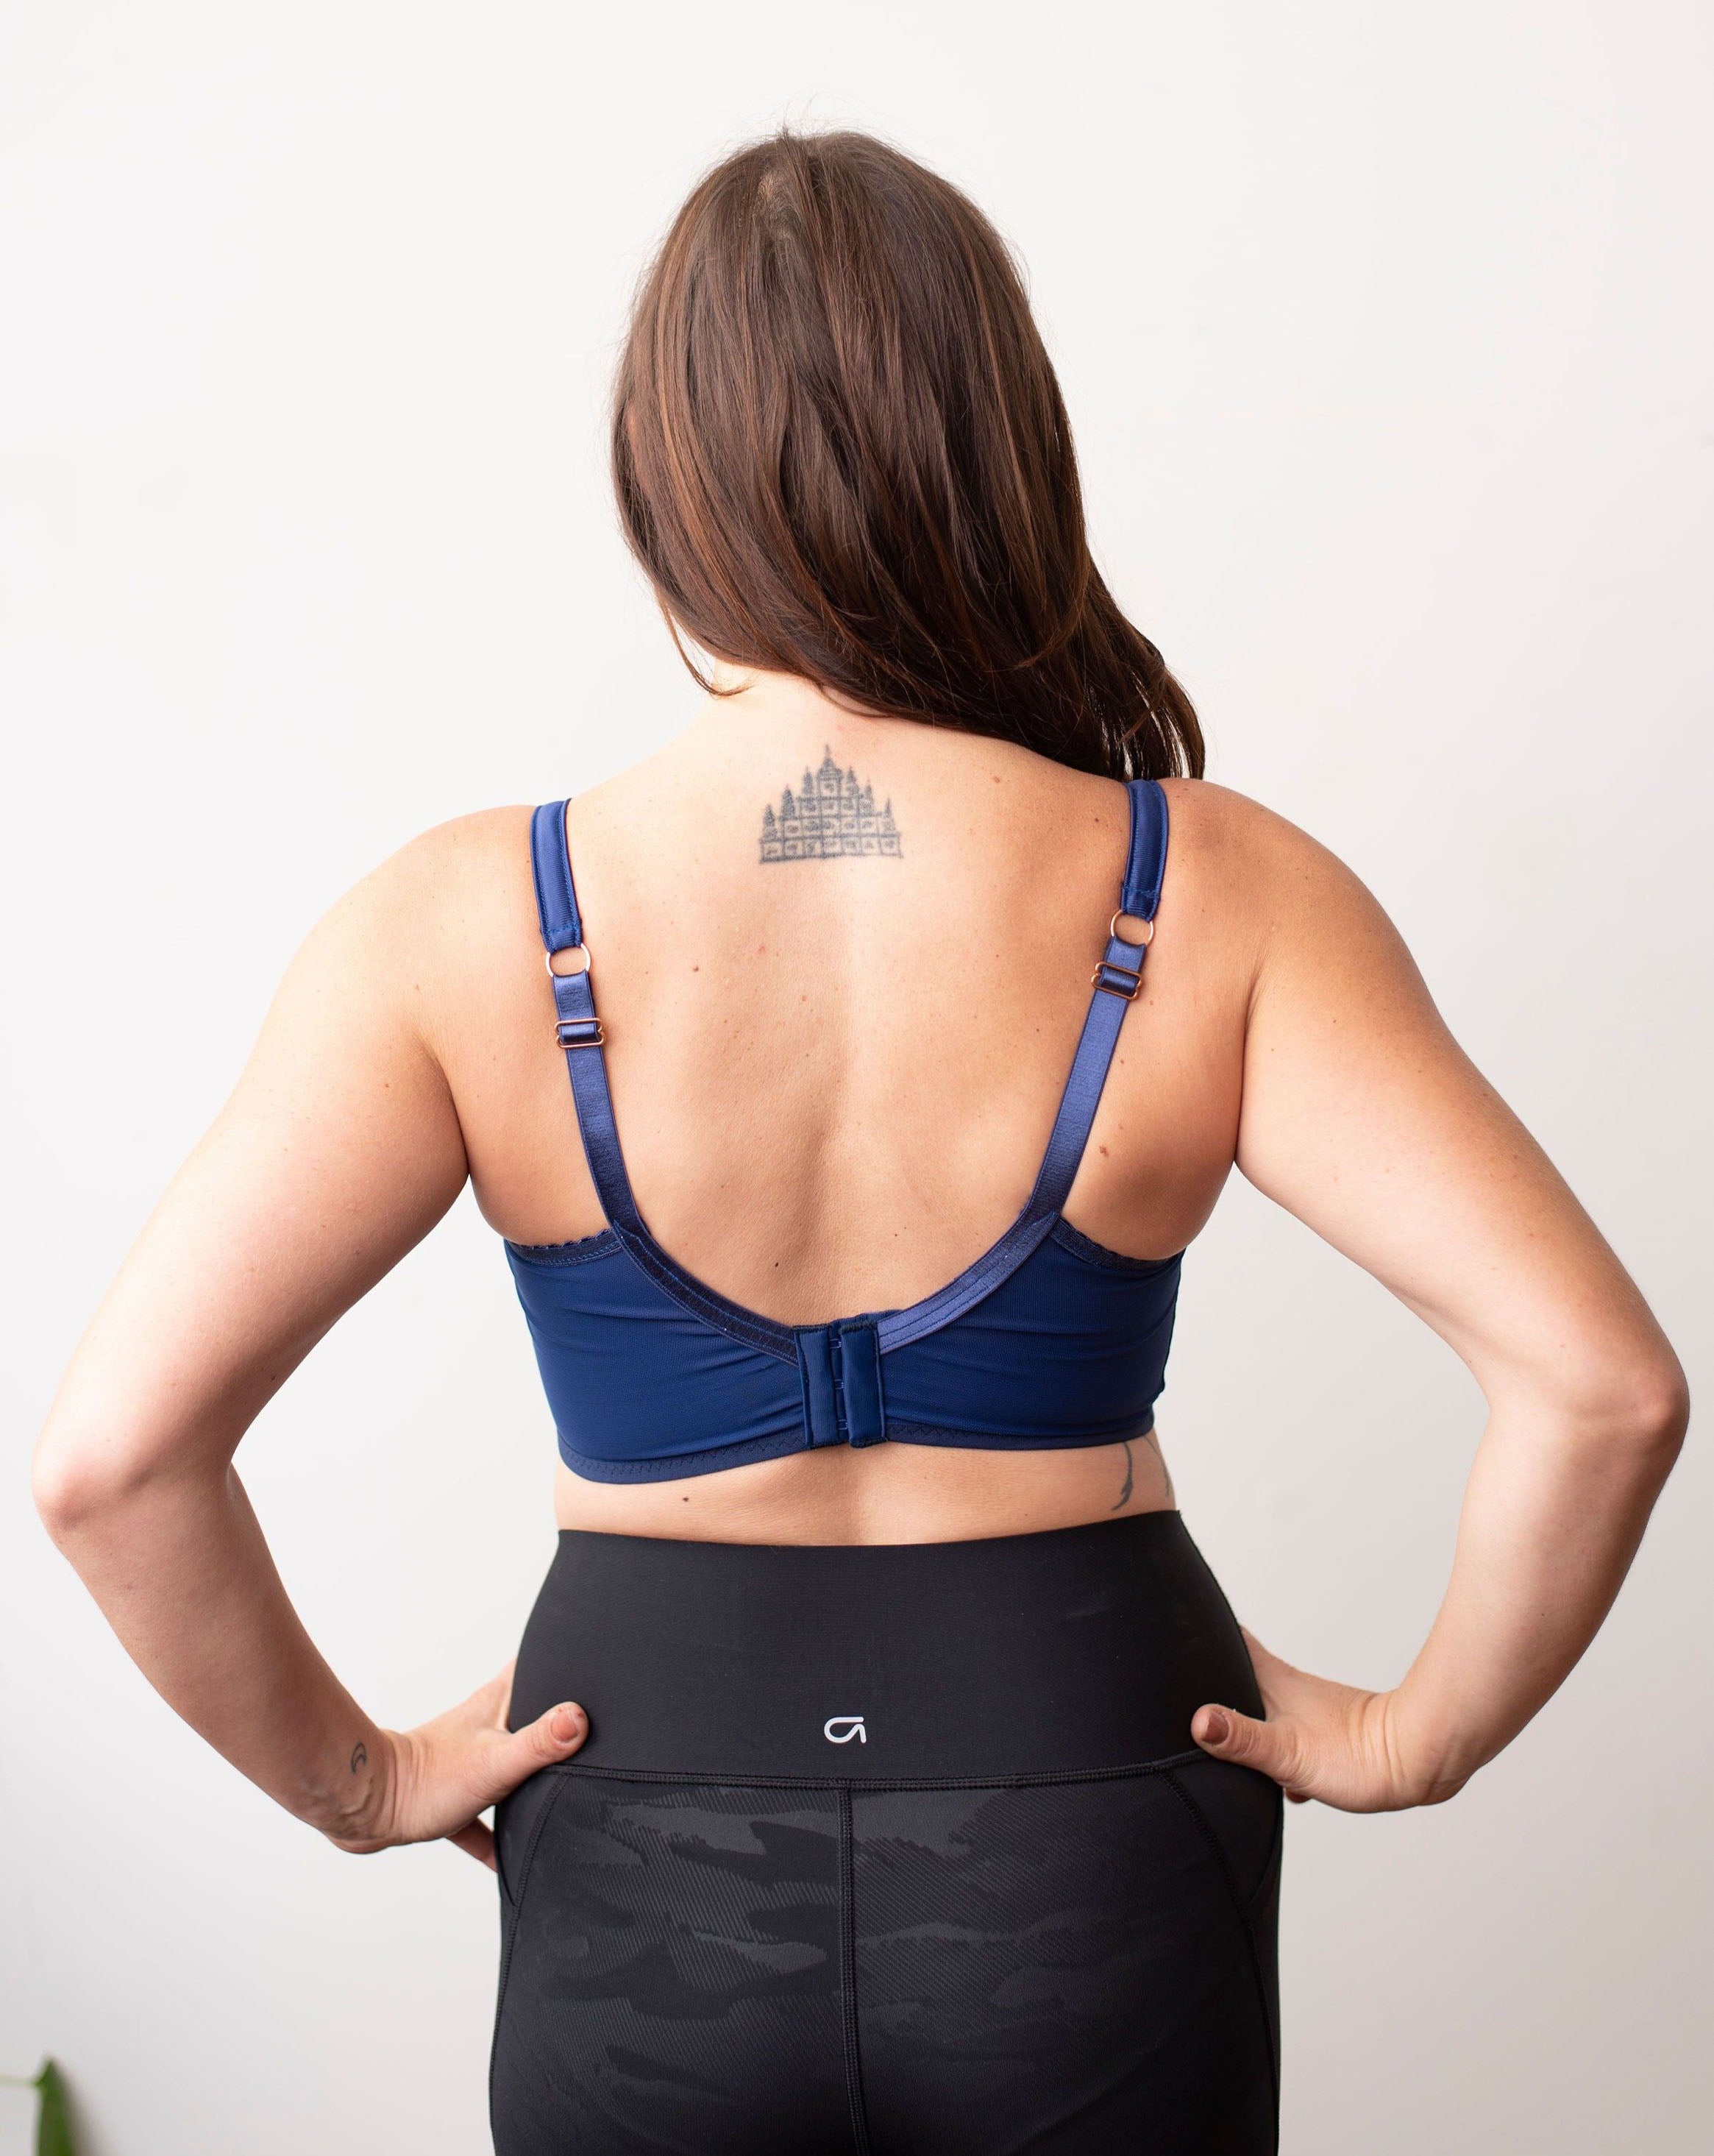 Back shot of model wearing navy blue minimal solid bra against a plain white background.